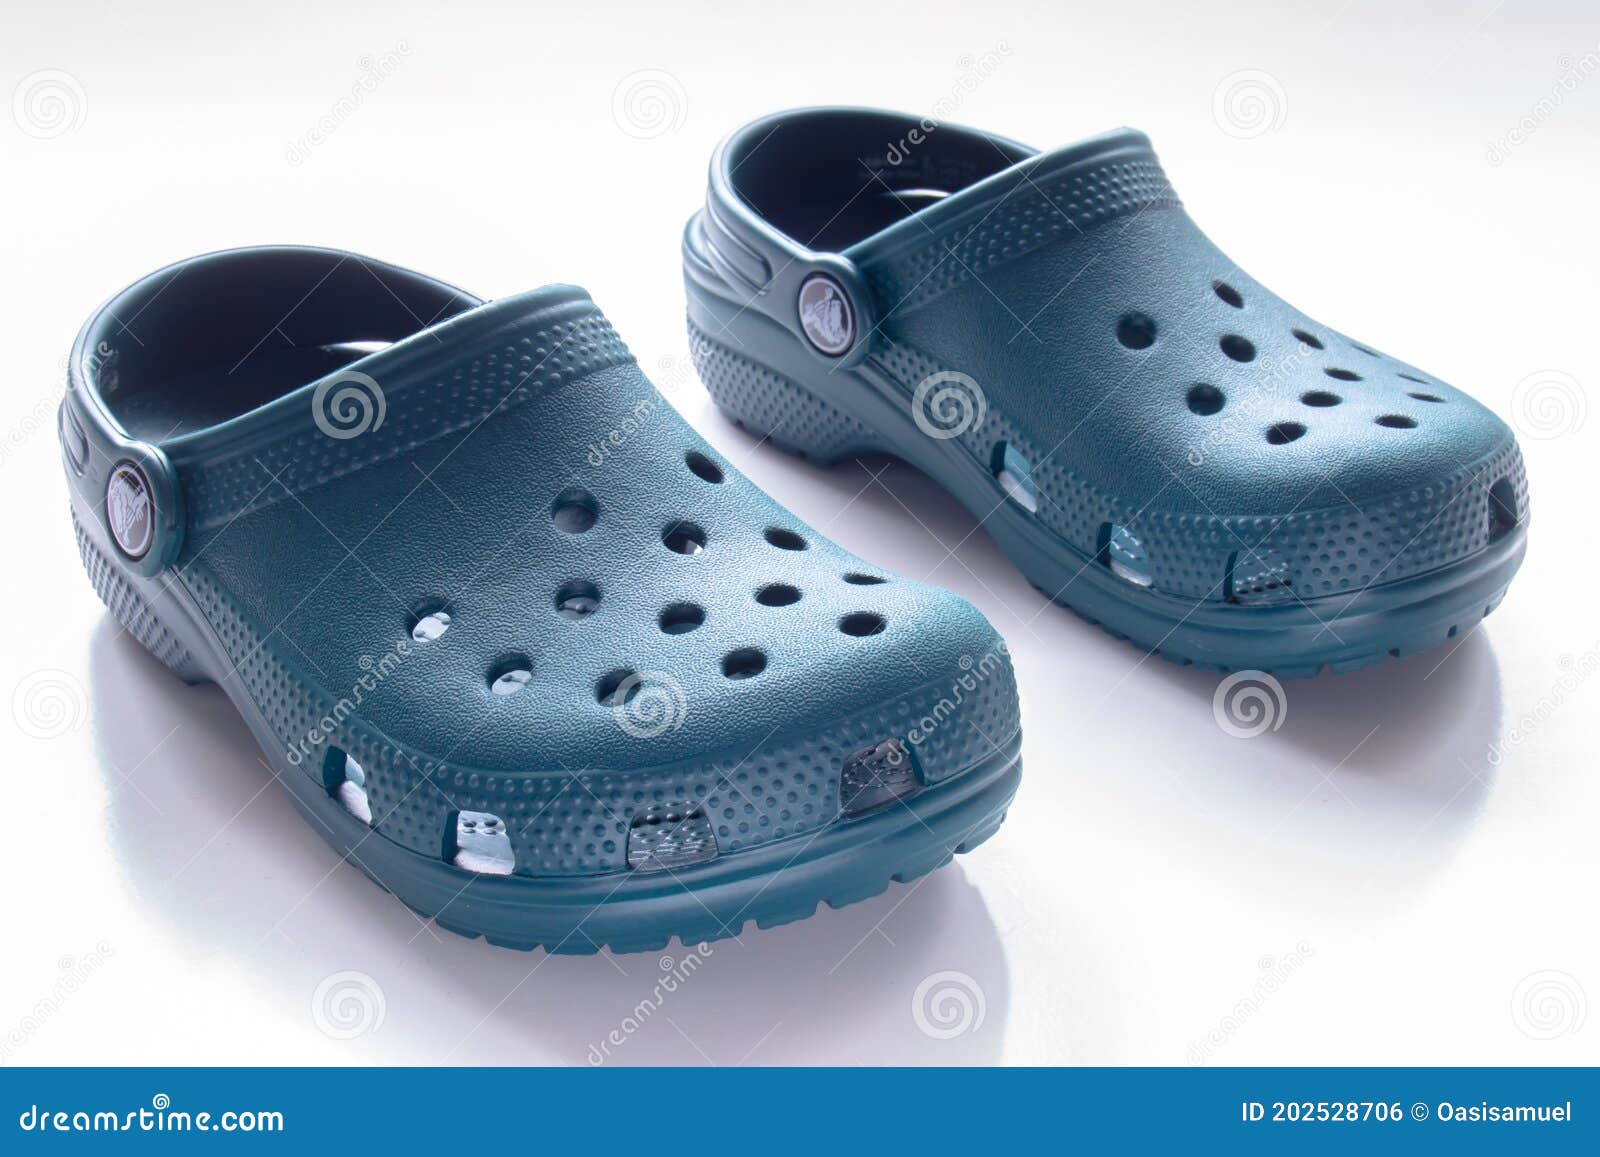 crocs free pair canada